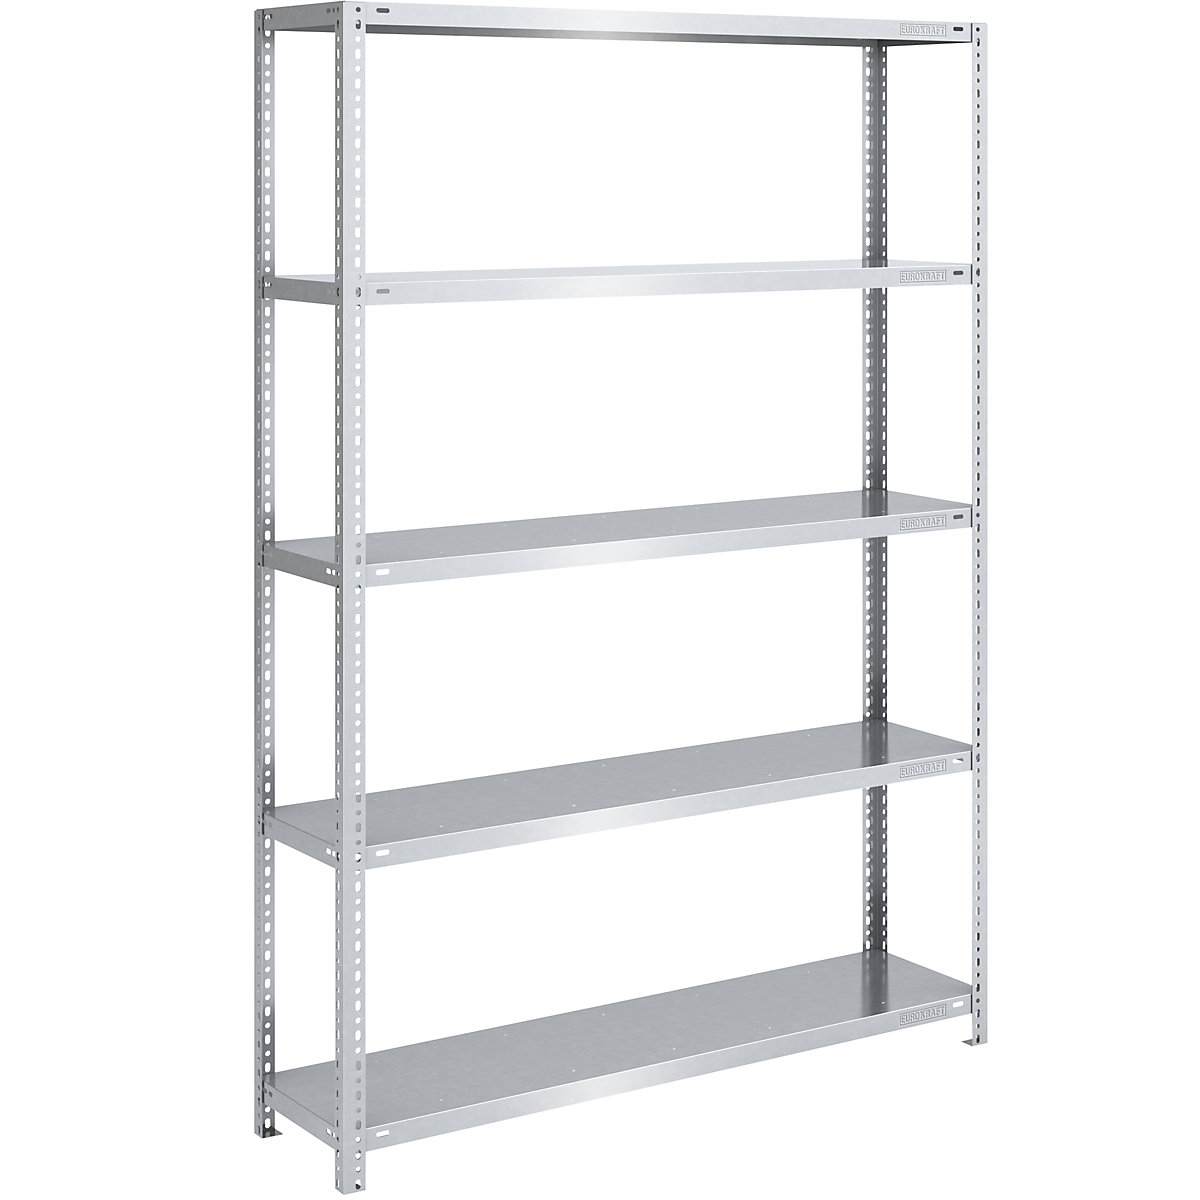 Bolt-together shelf unit, light duty, zinc plated – eurokraft pro, shelf unit height 2000 mm, shelf width 1300 mm, depth 400 mm, standard shelf unit-13